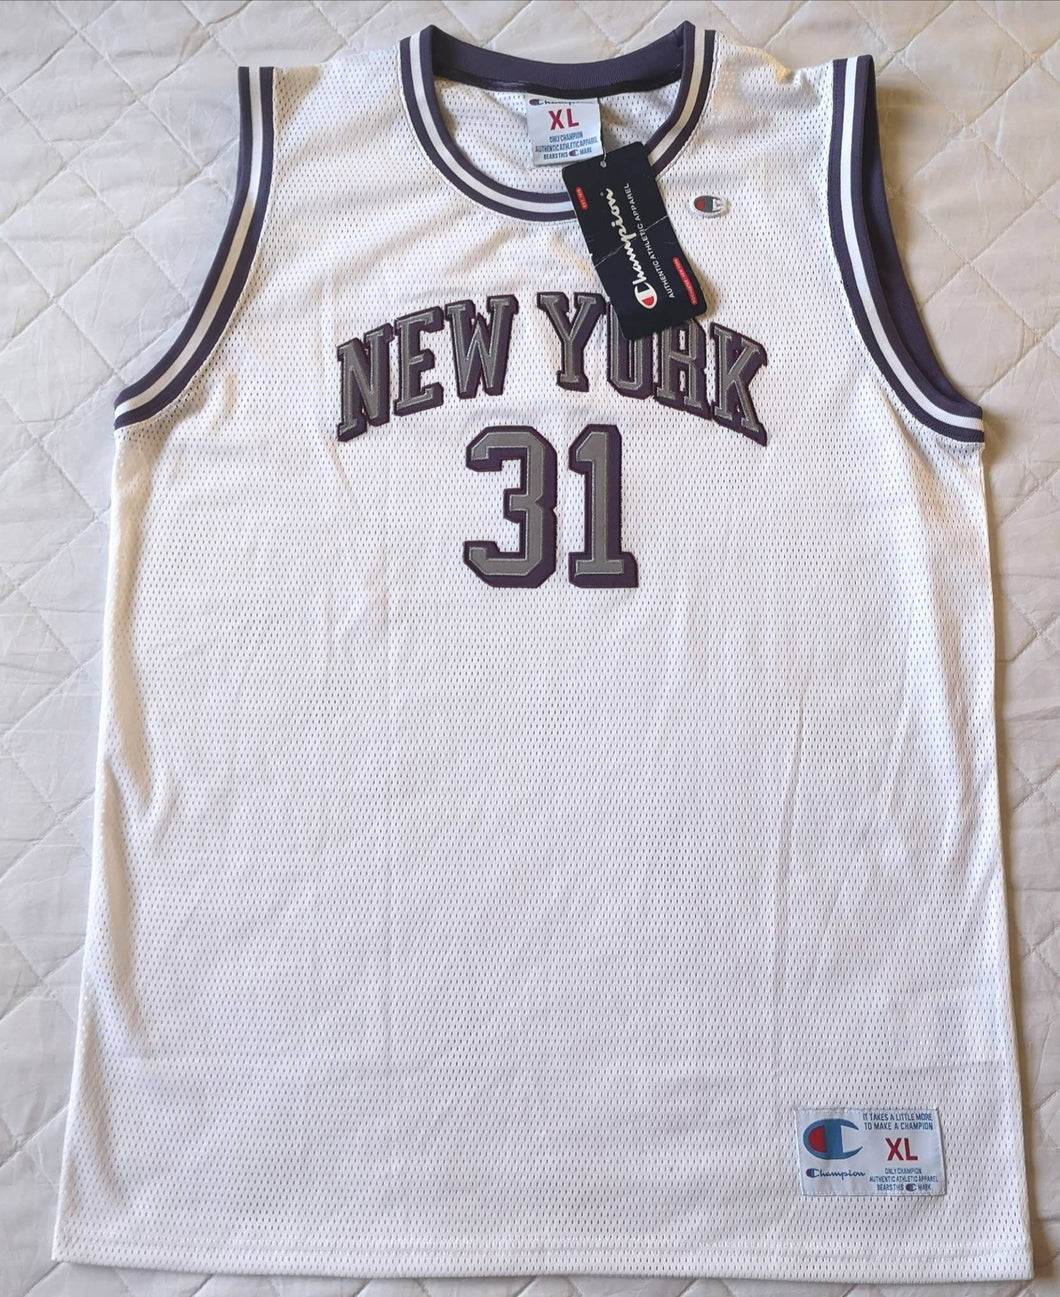 Authentic jersey New York Knicks #31 NBA Champion